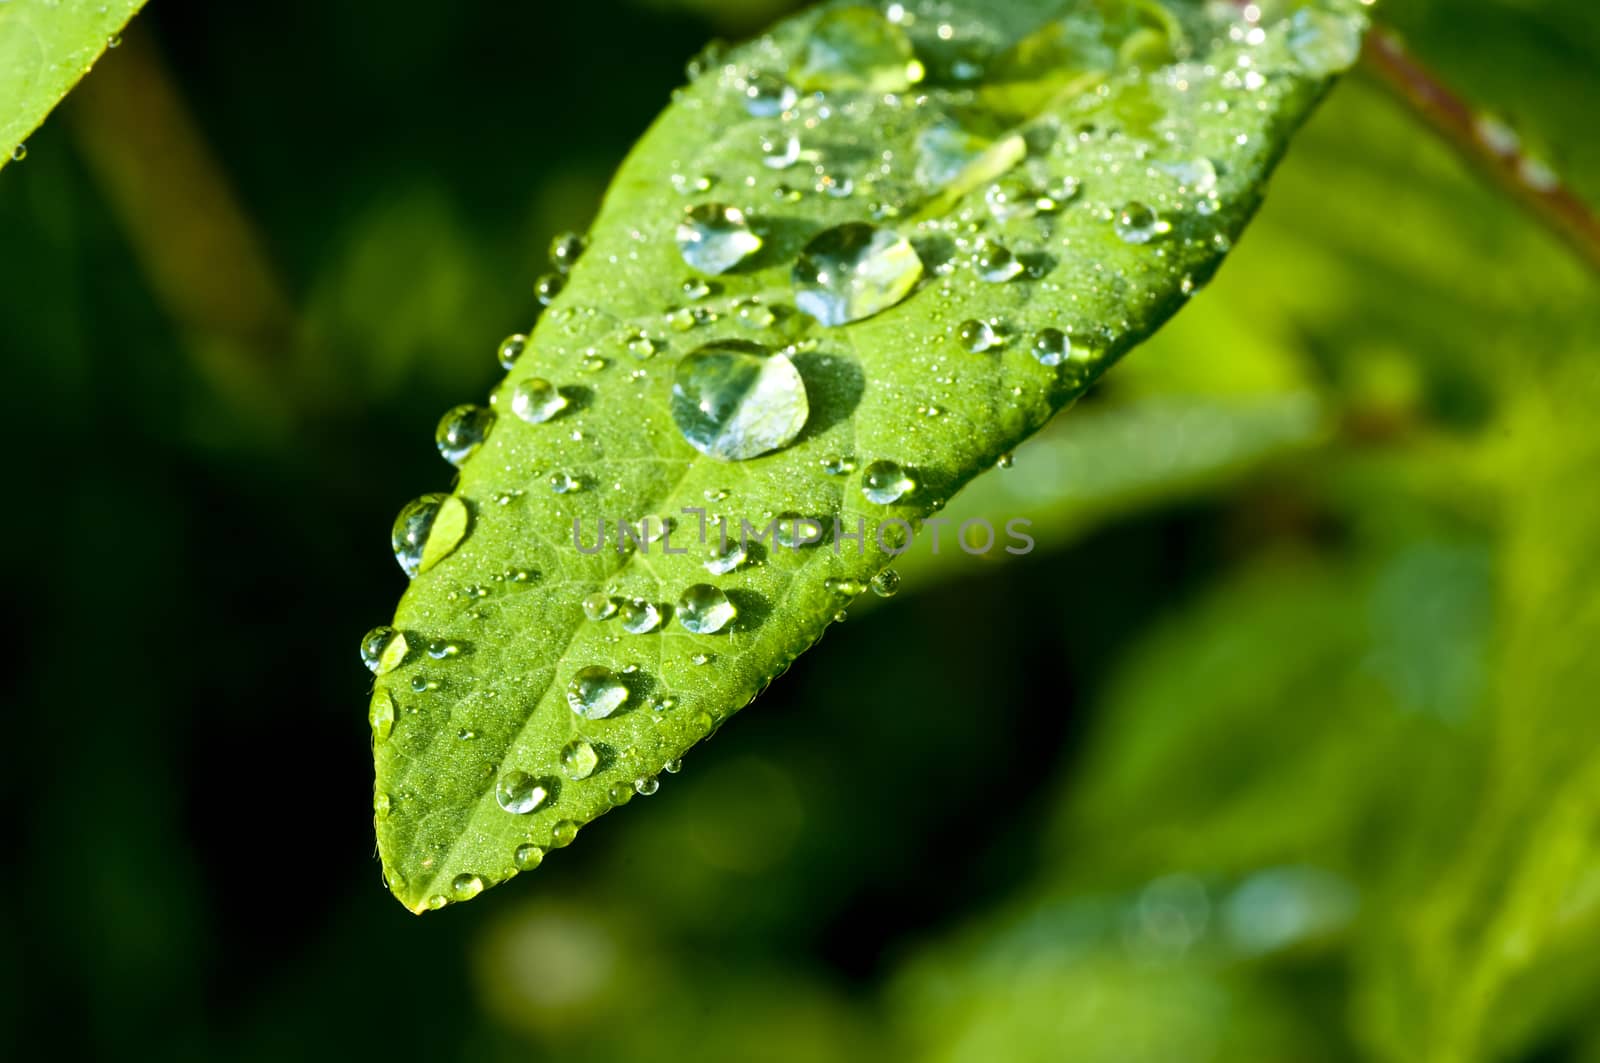 raindrops on leaf by Jochen